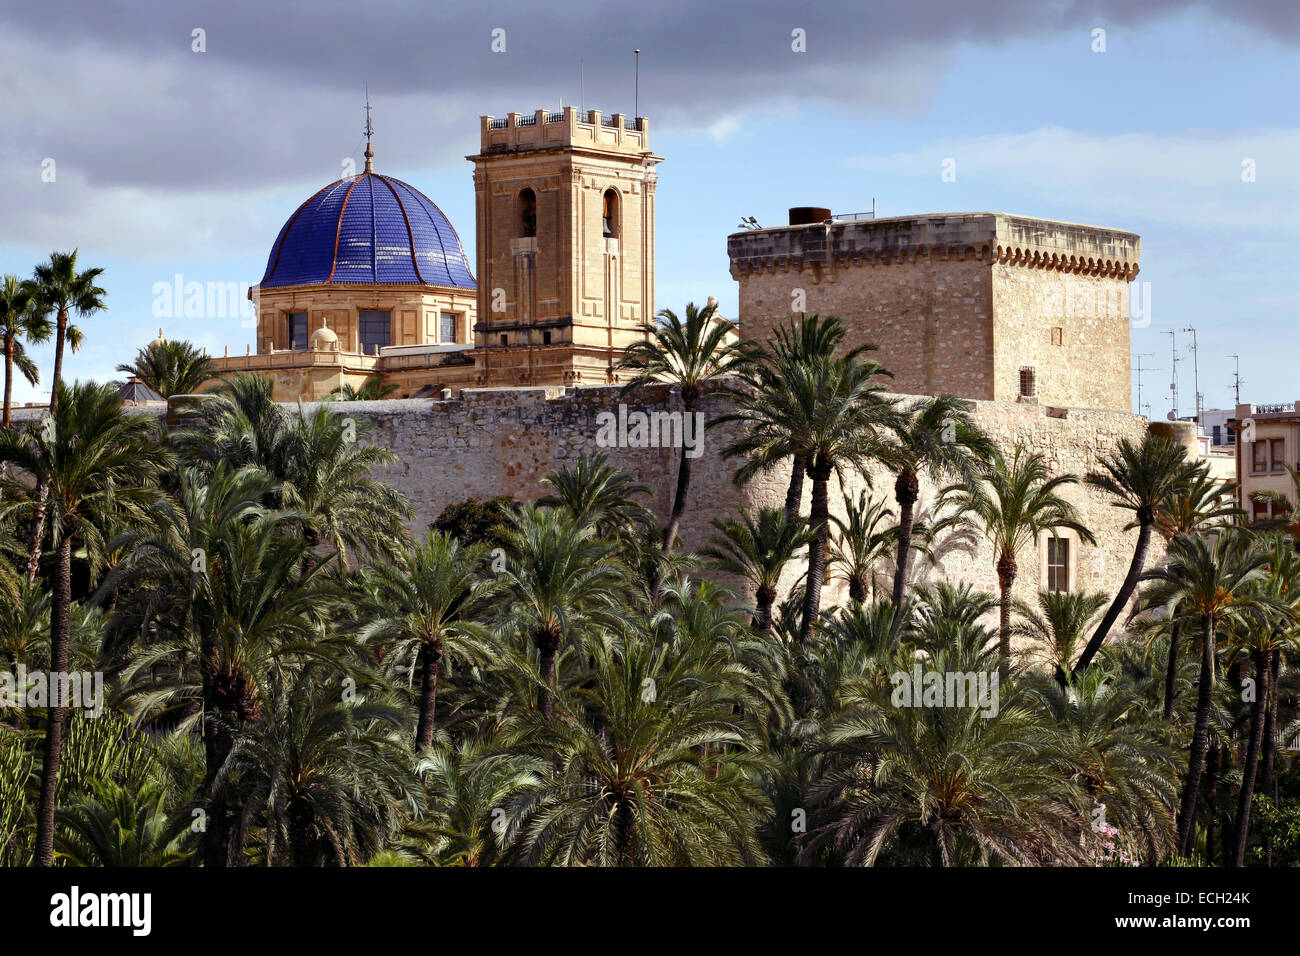 Basilica de Santa Maria, Palacio de Altamira / Palazzo Altamira e Palmeral de Elche palmeto di Elche - Elx, Alicante, Spagna Foto Stock